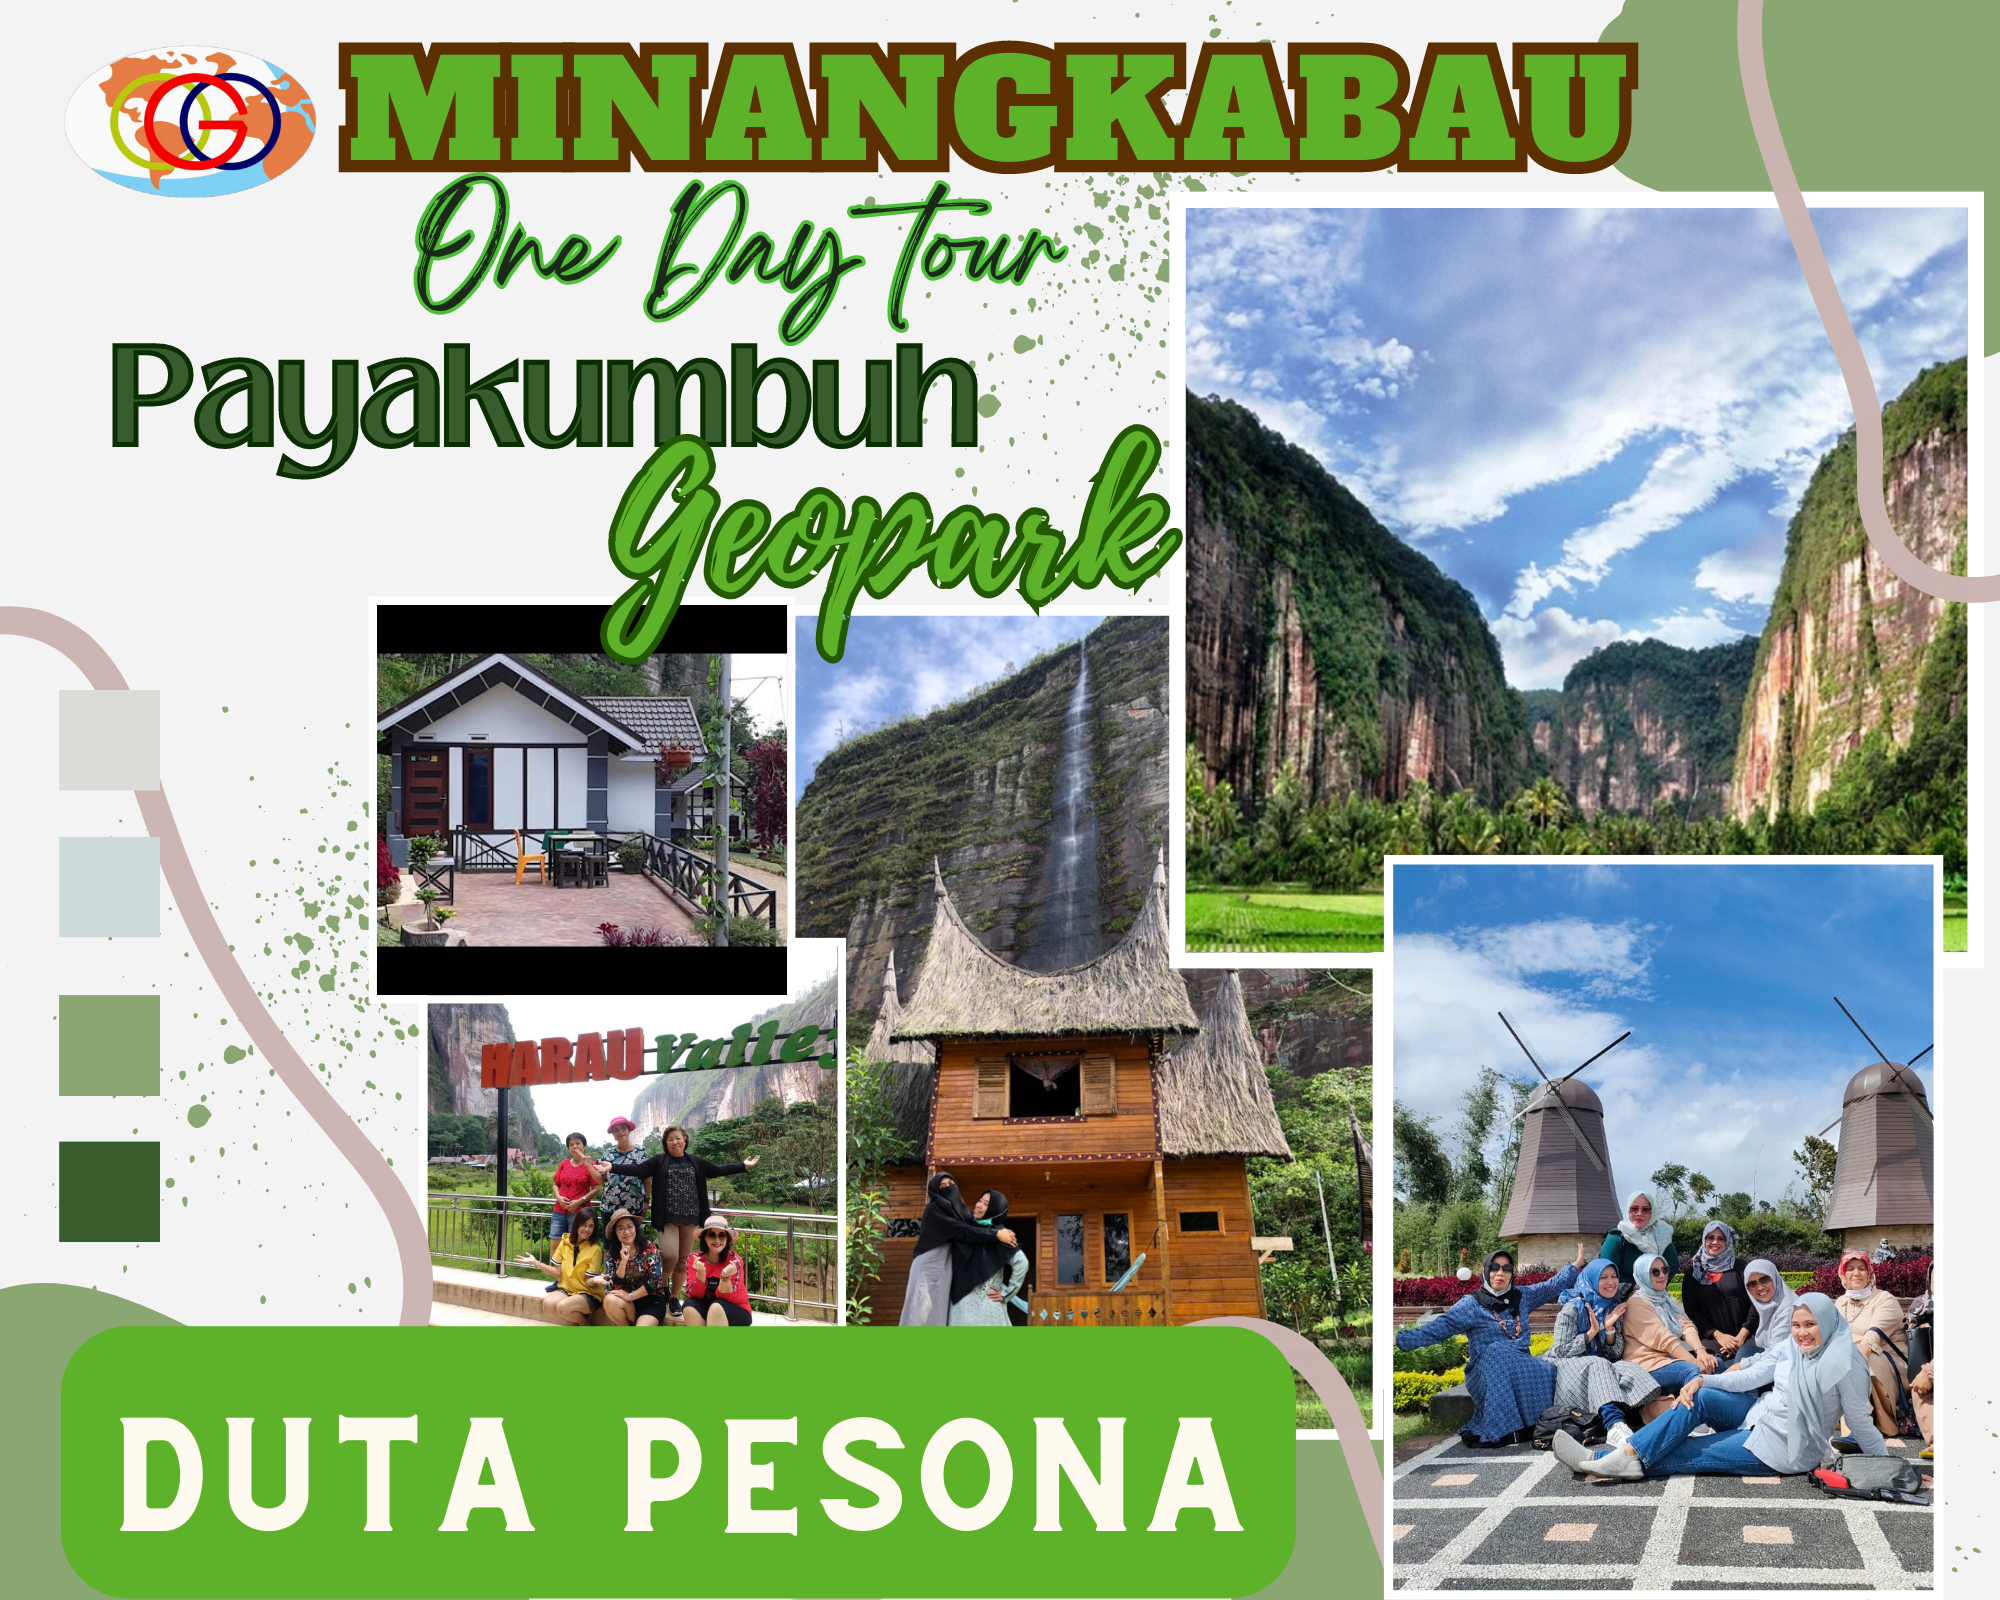 Payakumbuh geopark tour duta pesona